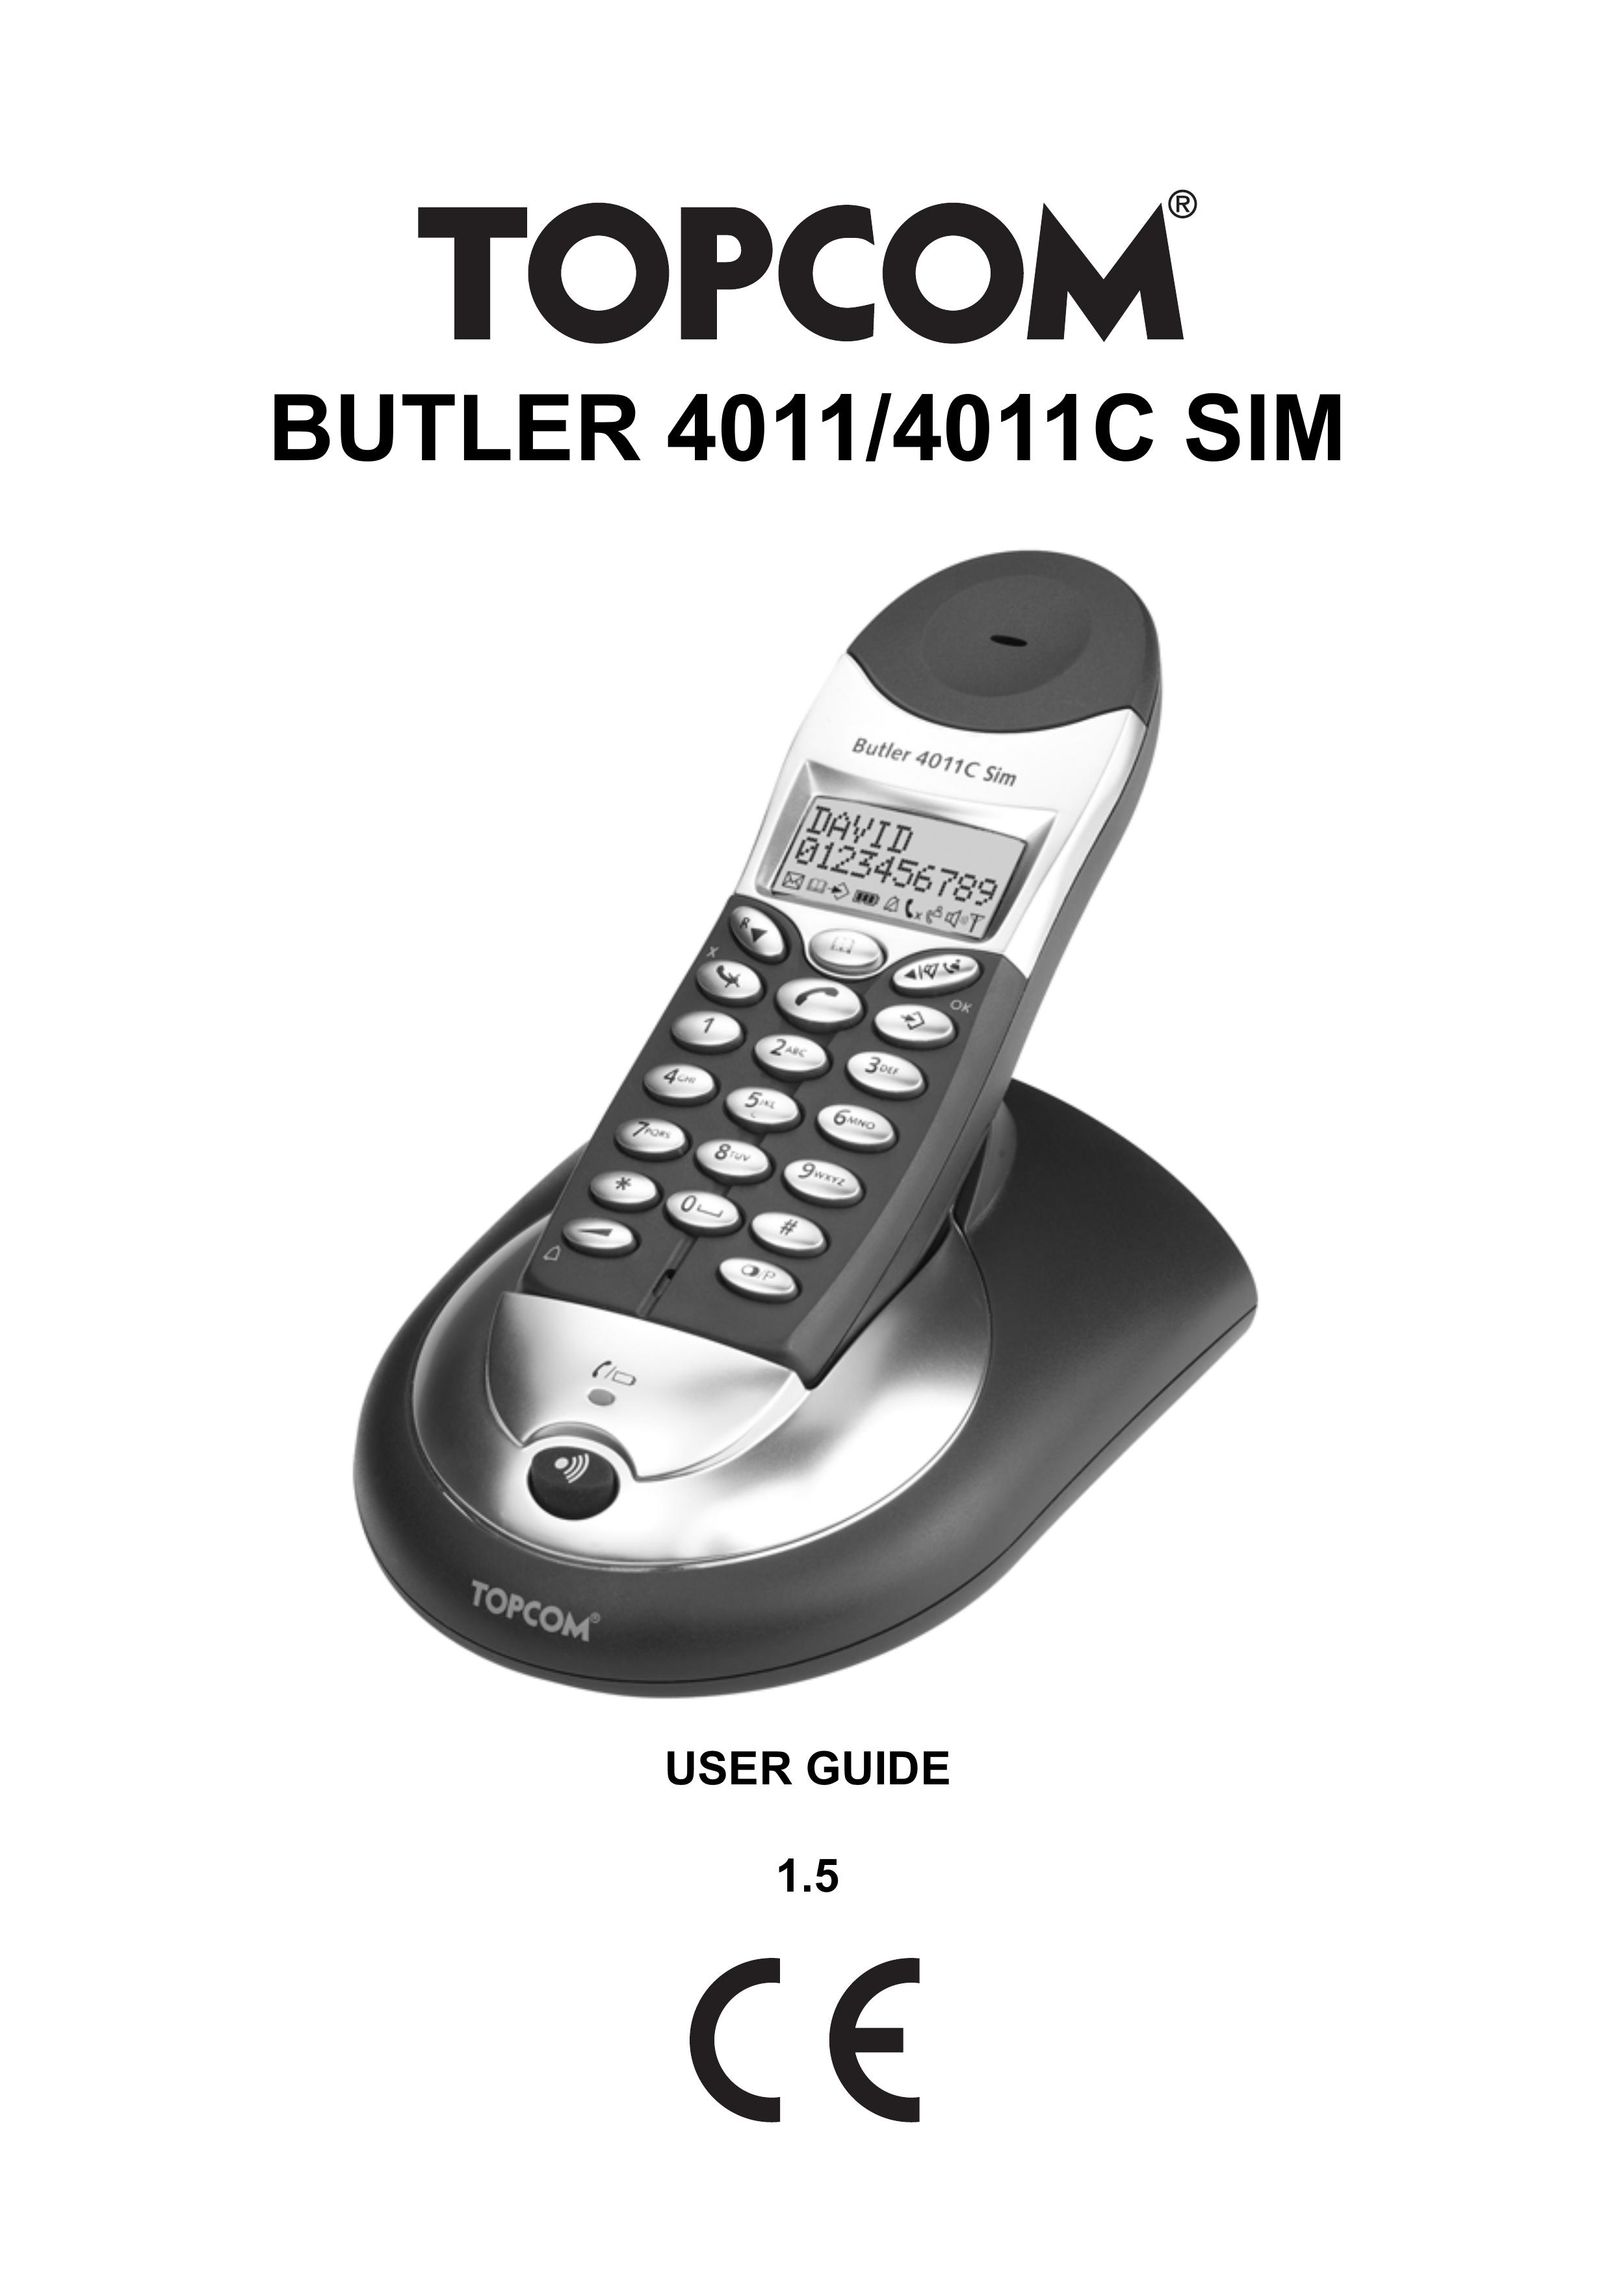 Topcom 4011 SIM Cordless Telephone User Manual